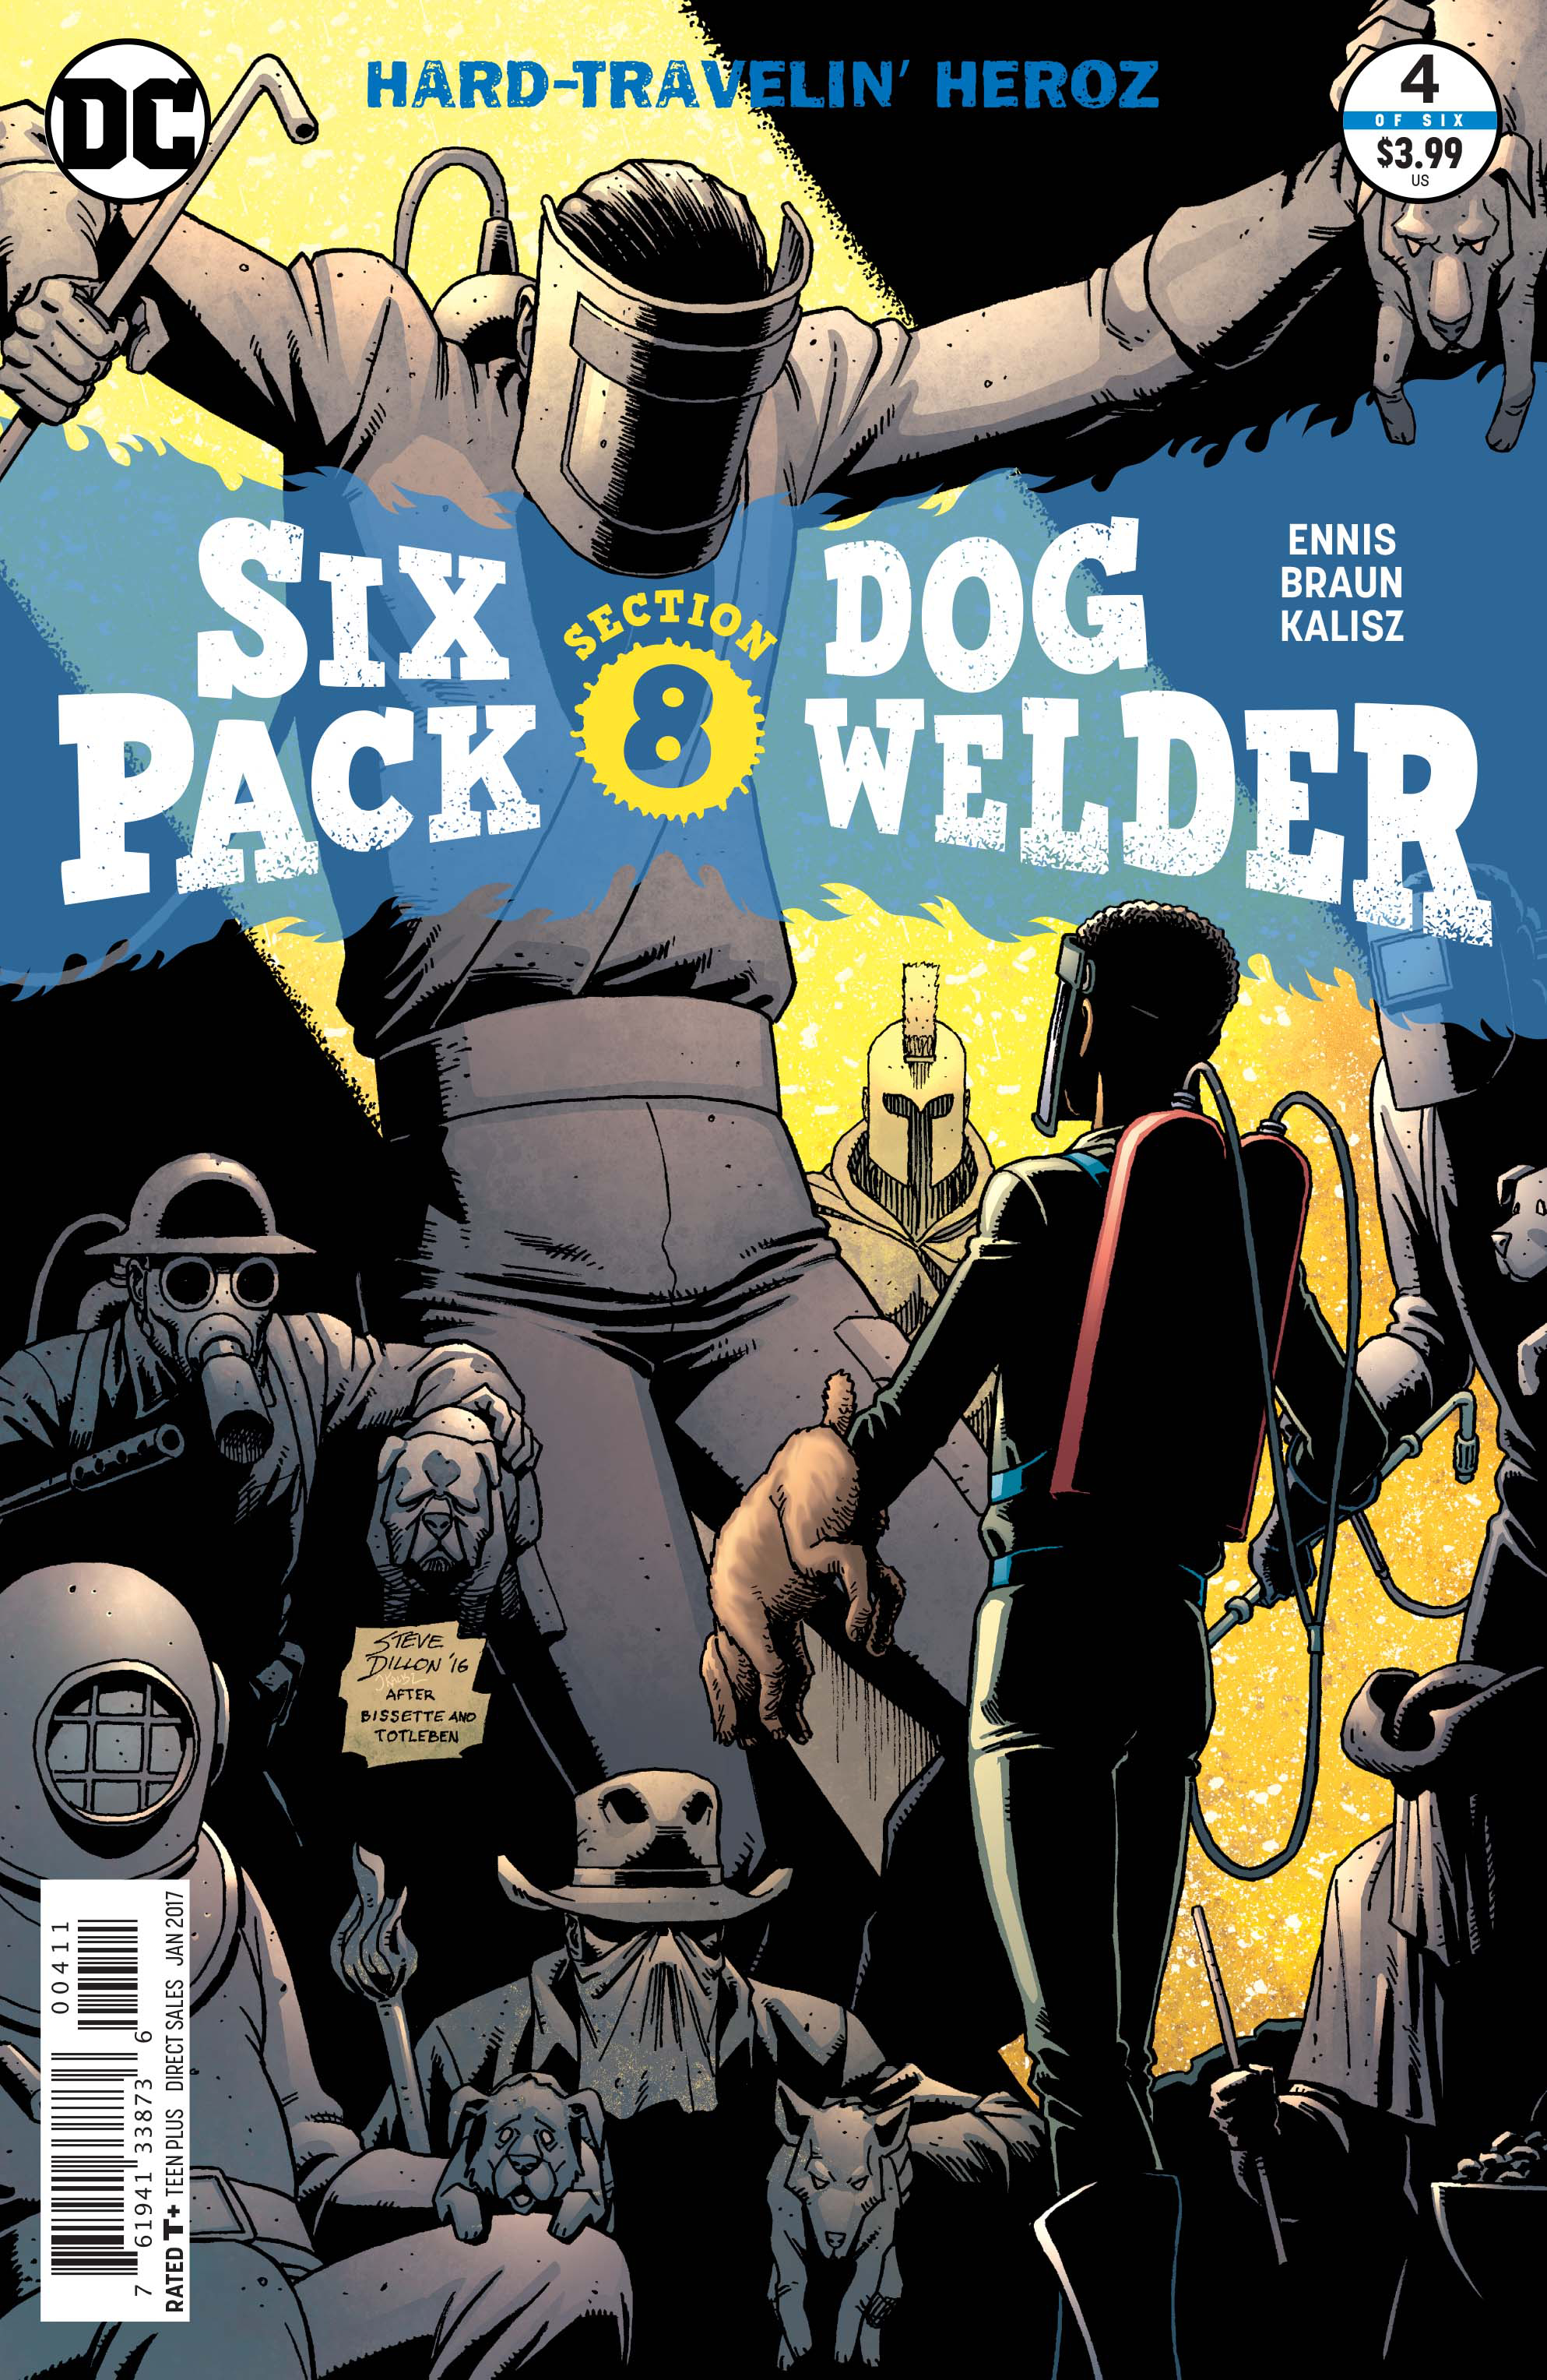 SIXPACK & DOGWELDER HARD-TRAVELIN HEROZ #4 (OF 6)